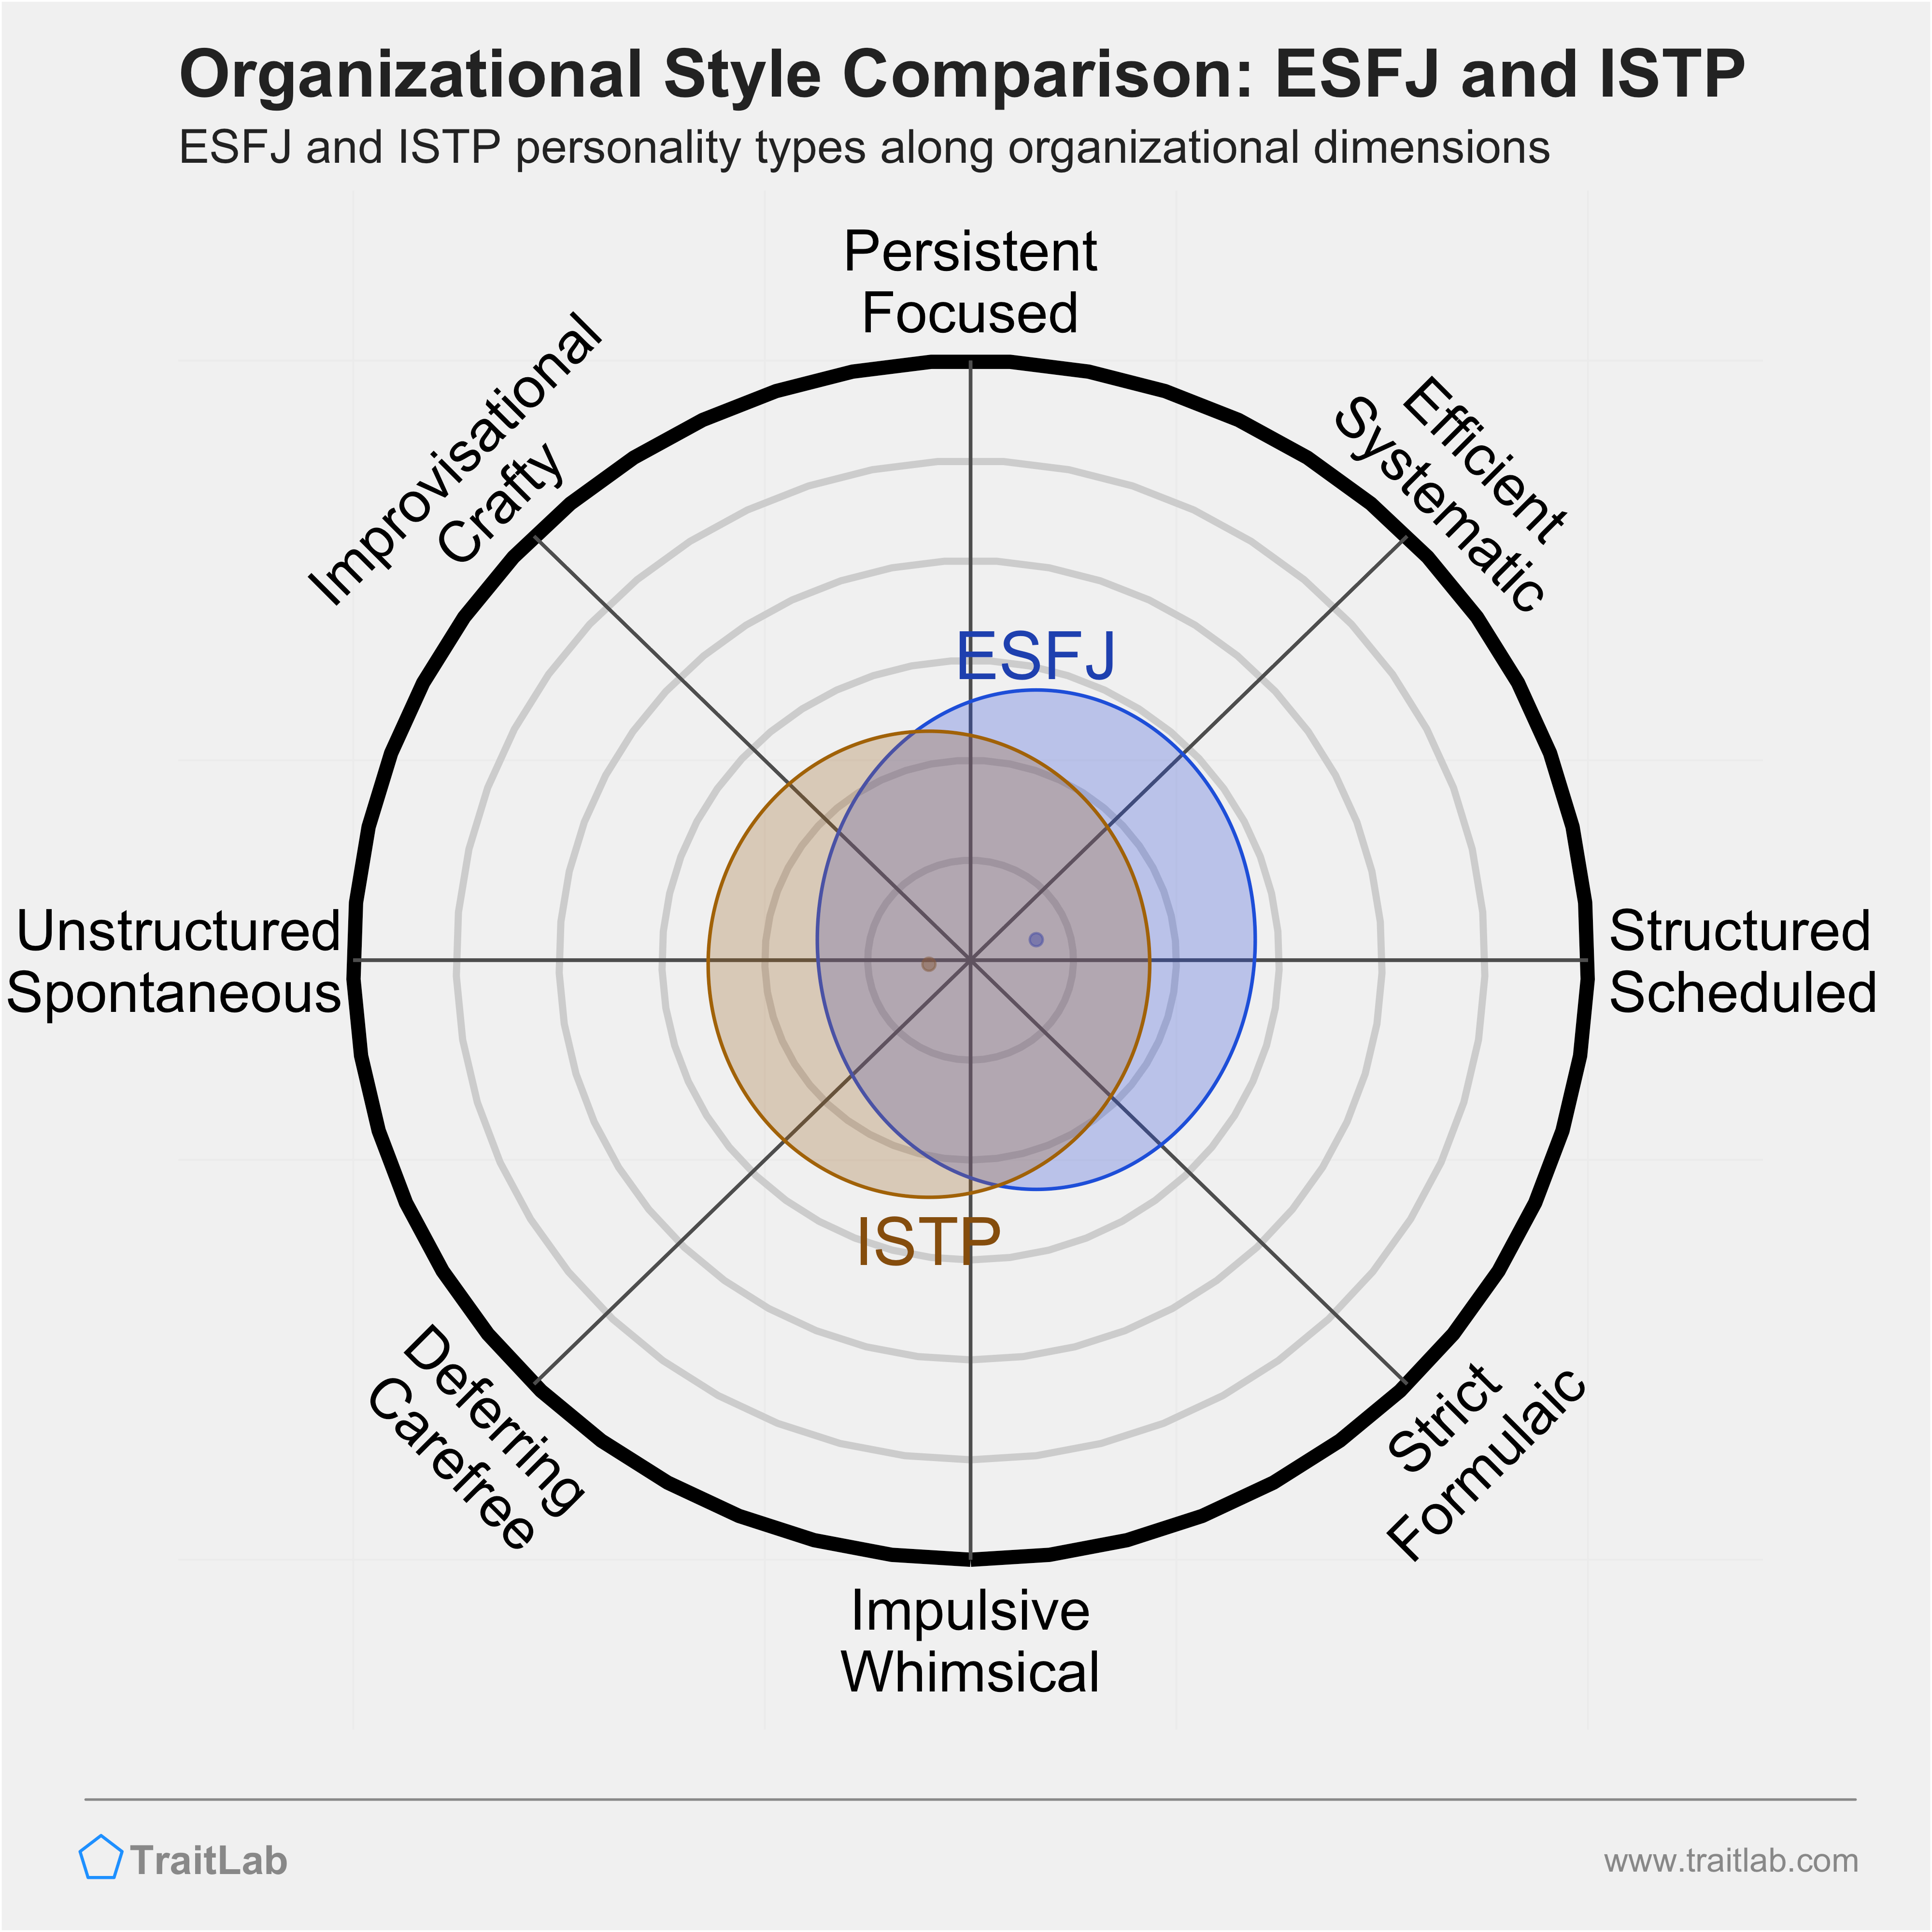 ESFJ and ISTP comparison across organizational dimensions